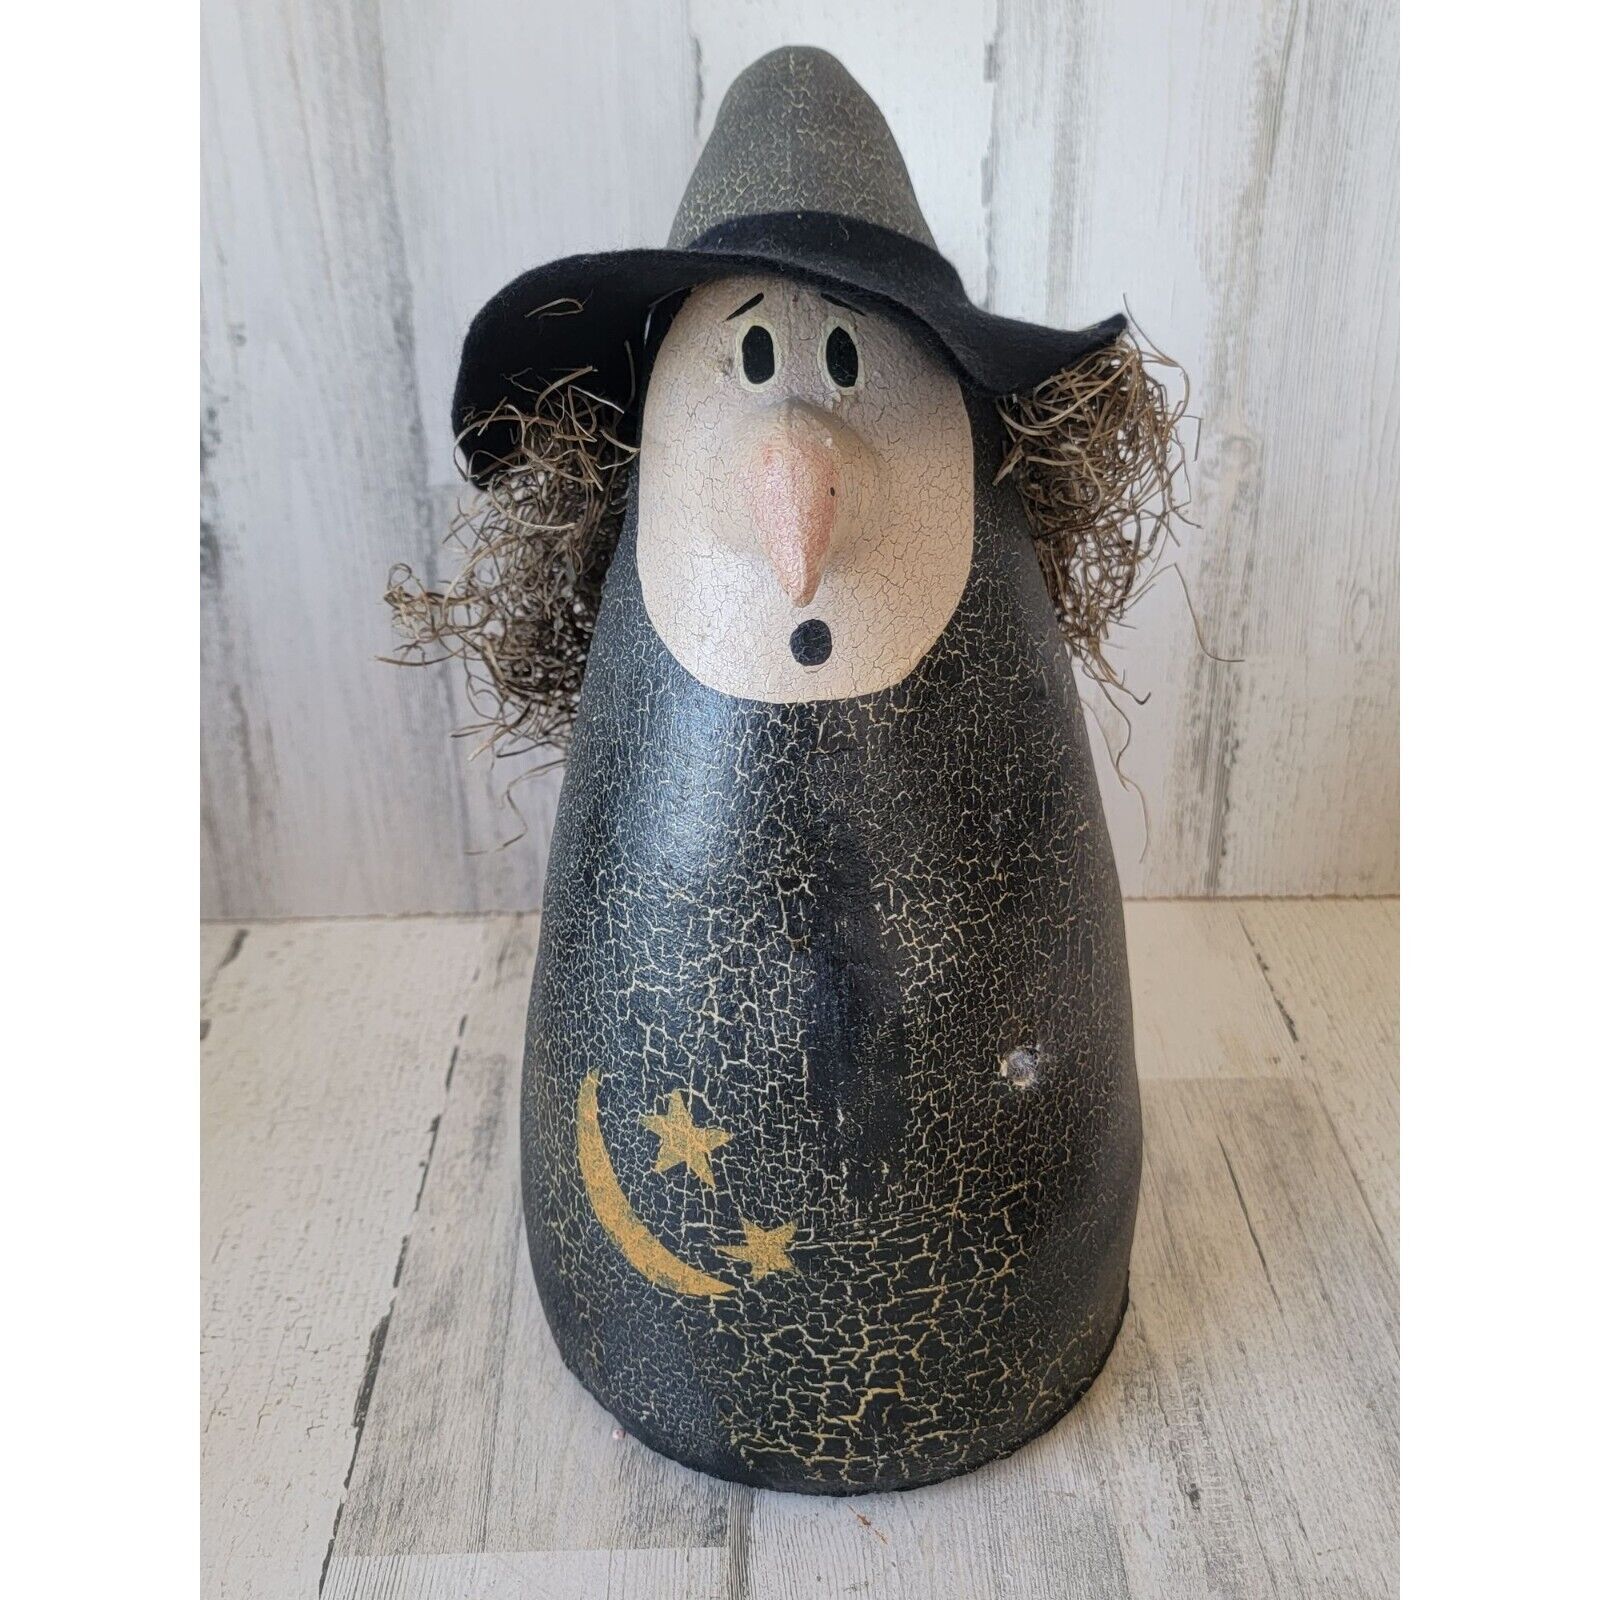 Natalie Silitch AS IS folk art witch Halloween prop figure moon